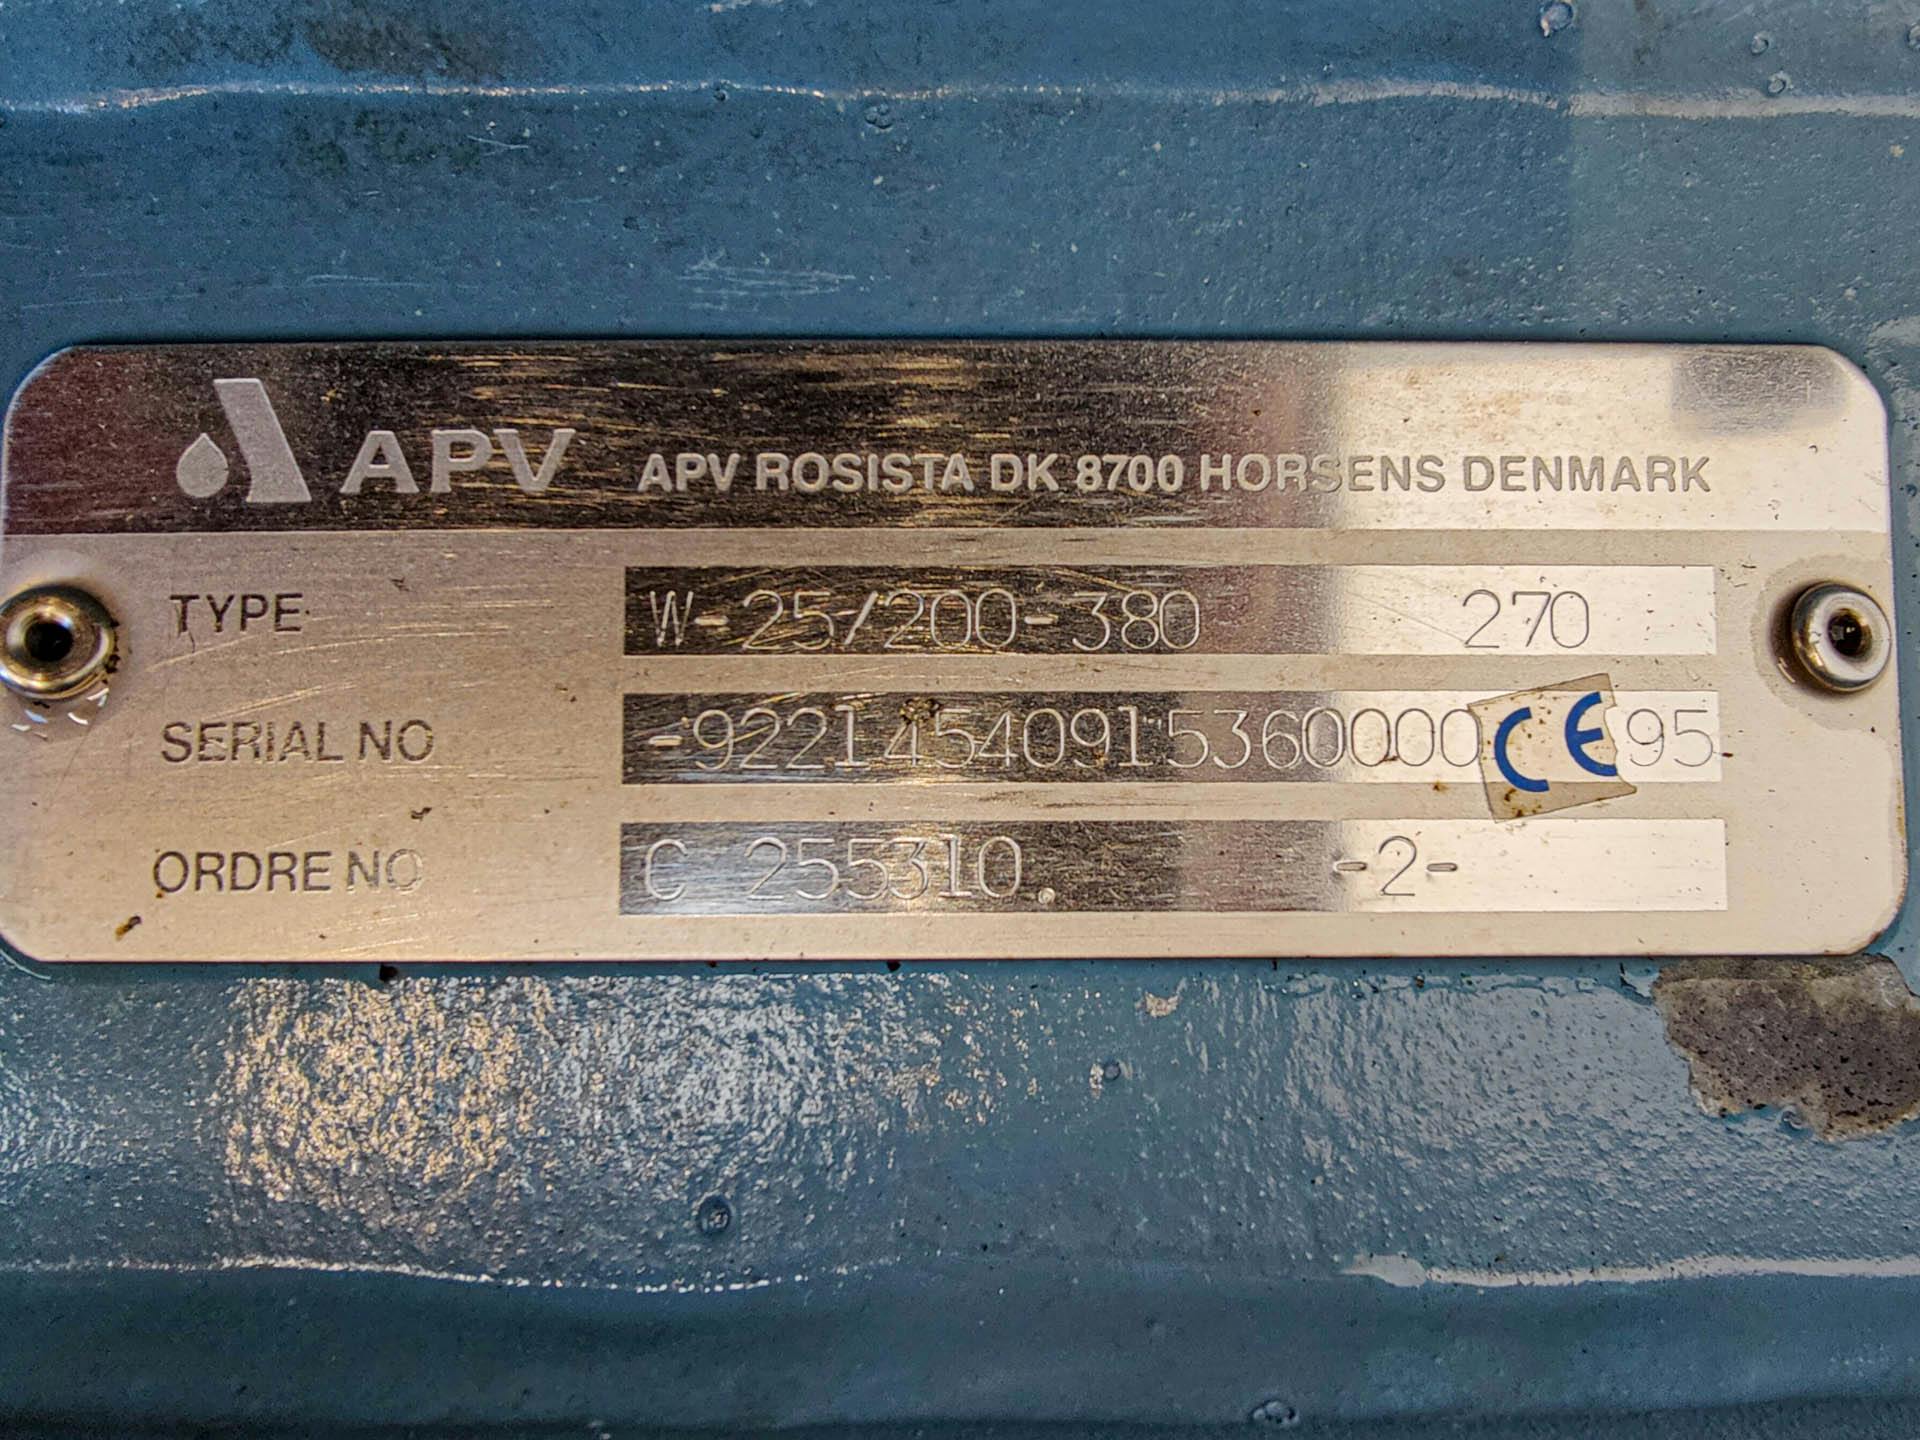 APV Rosista W-25/200-380 - Centrifugaalpomp - image 5